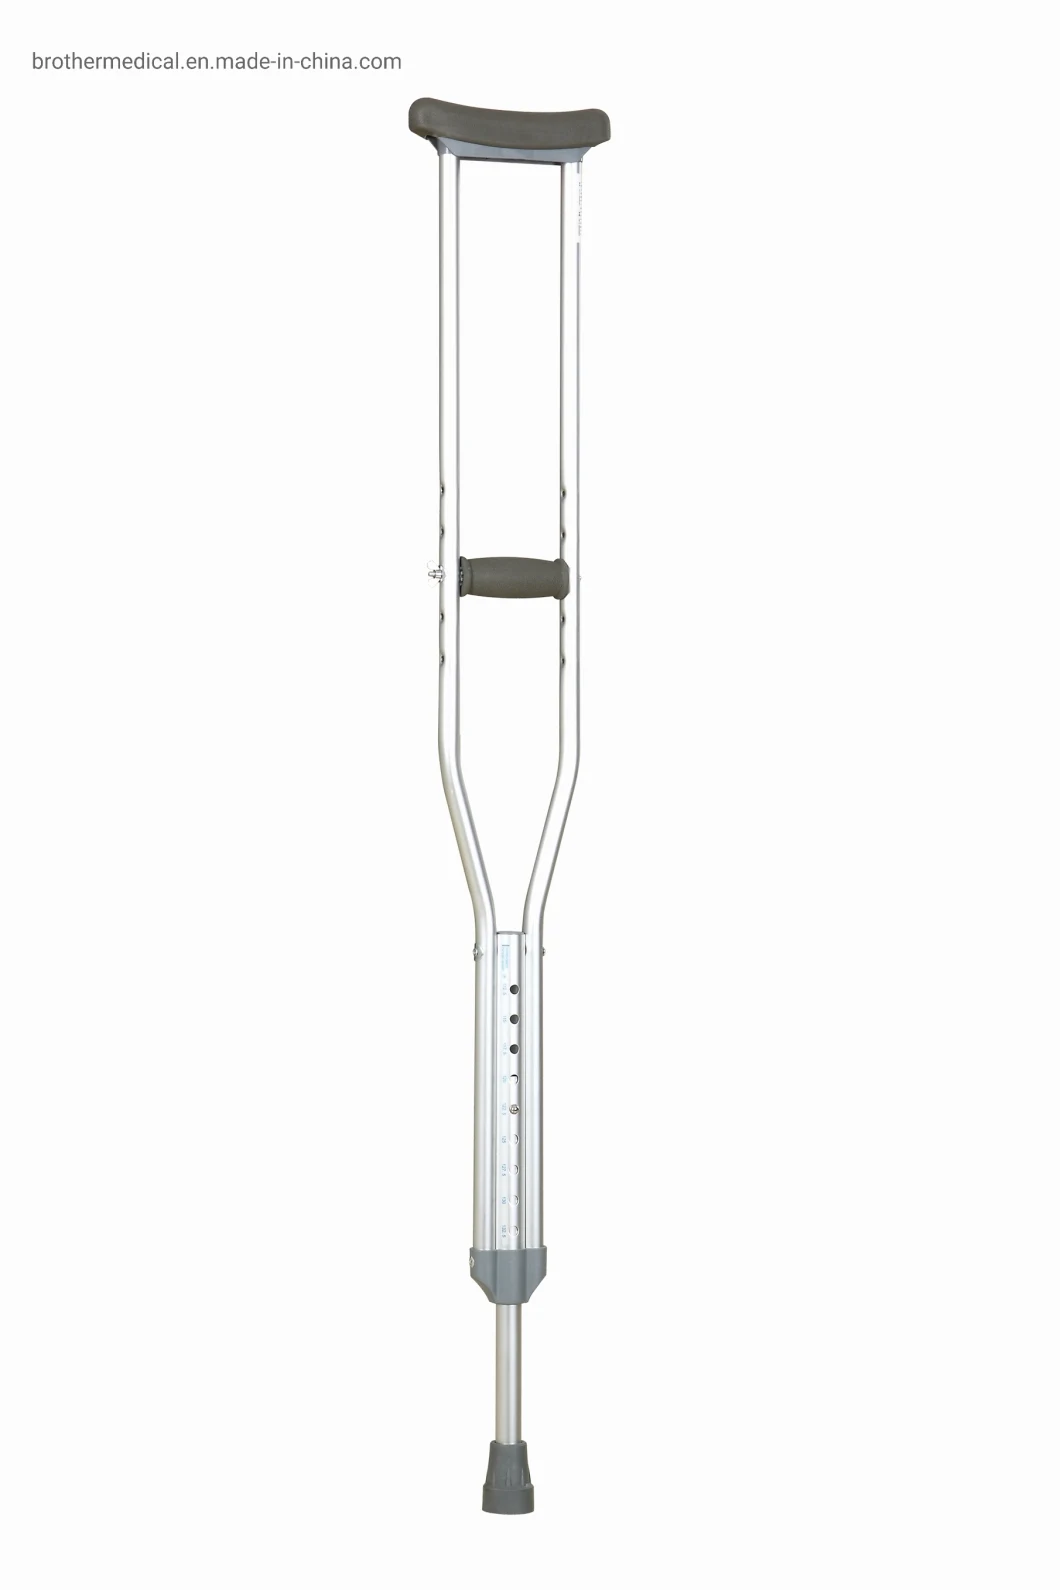 Comfortable Adjustable Aluminum Underarm Crutches Axillary Crutches for Elderly